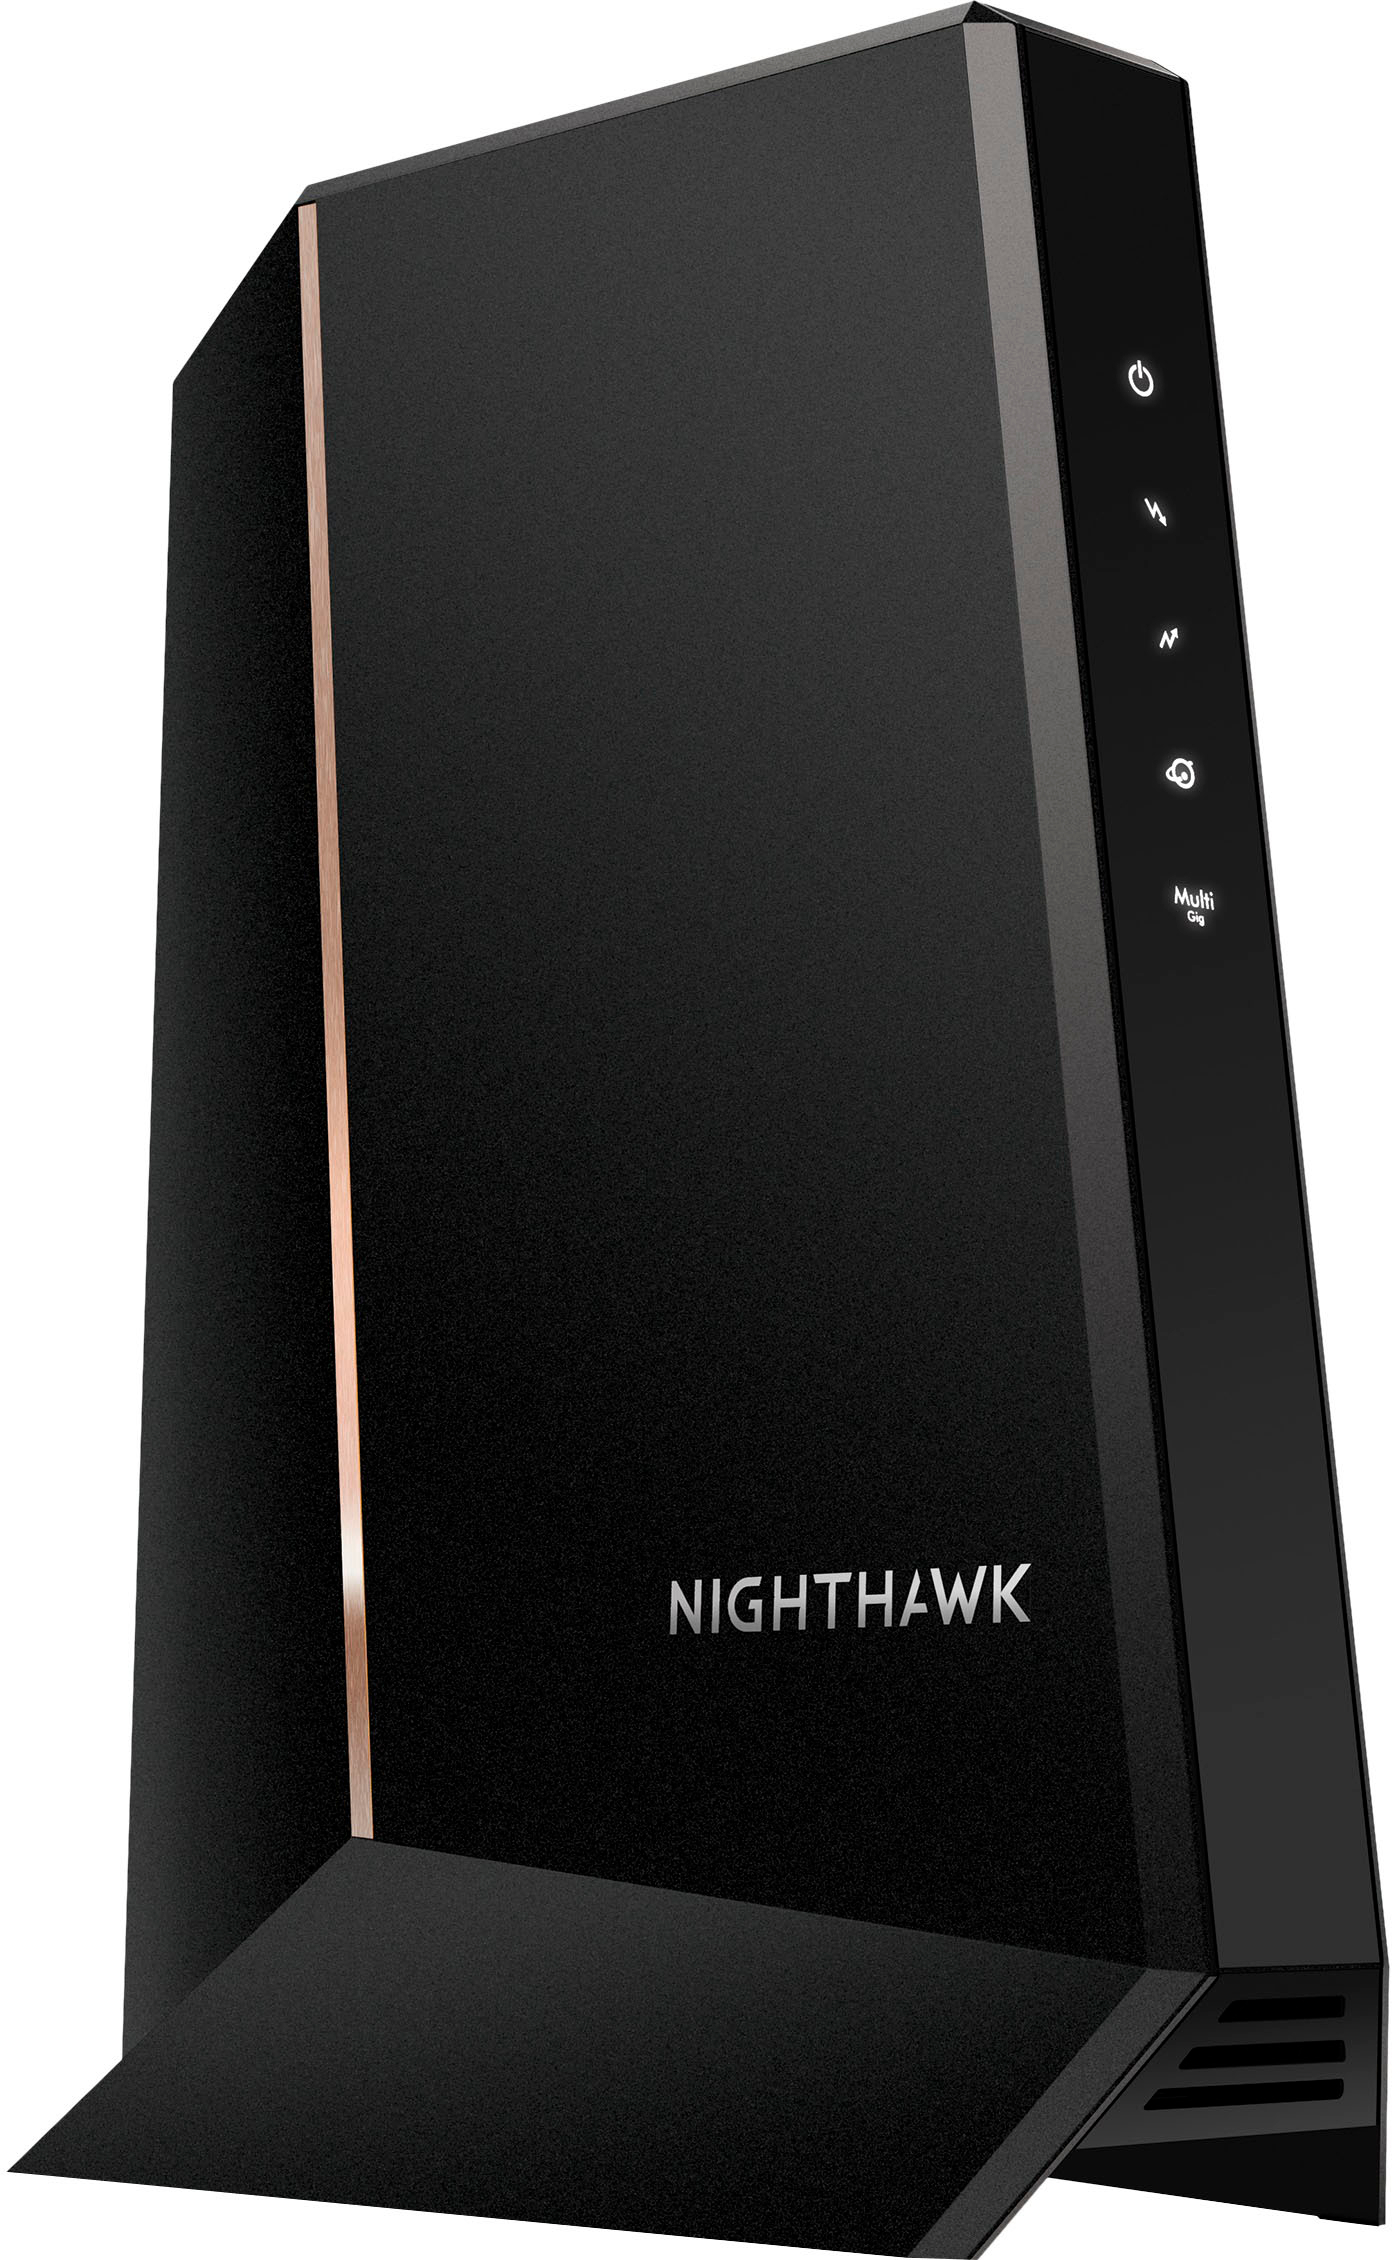 Angle View: NETGEAR - Nighthawk 32 x 8 DOCSIS 3.1 Cable Modem - Black